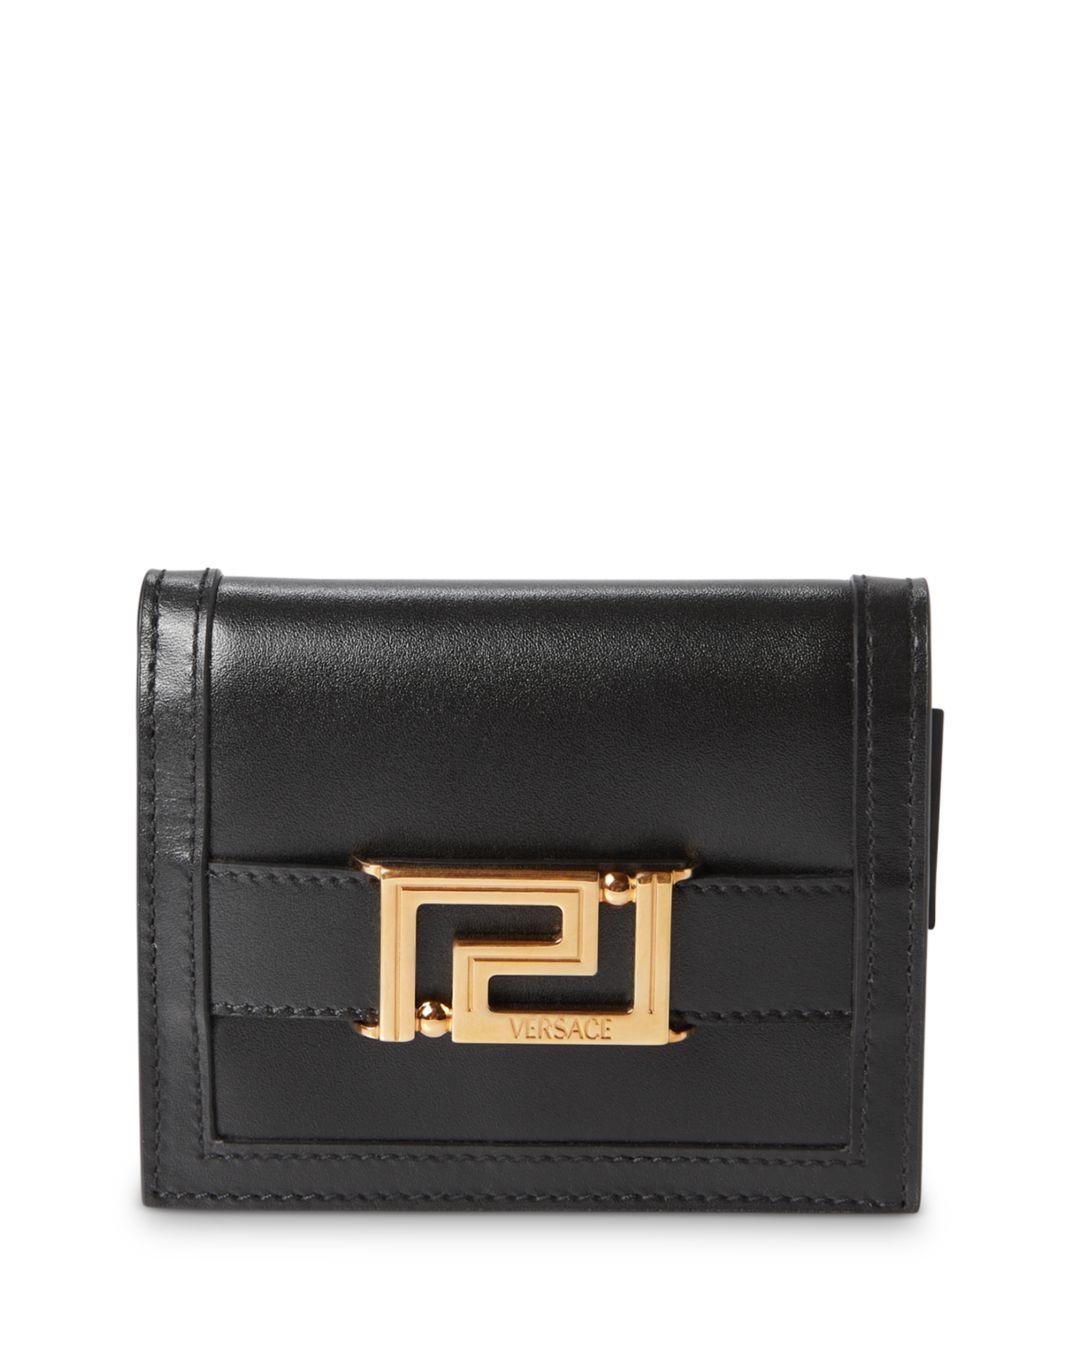 Versace Greca Goddess Leather Wallet in Black | Lyst